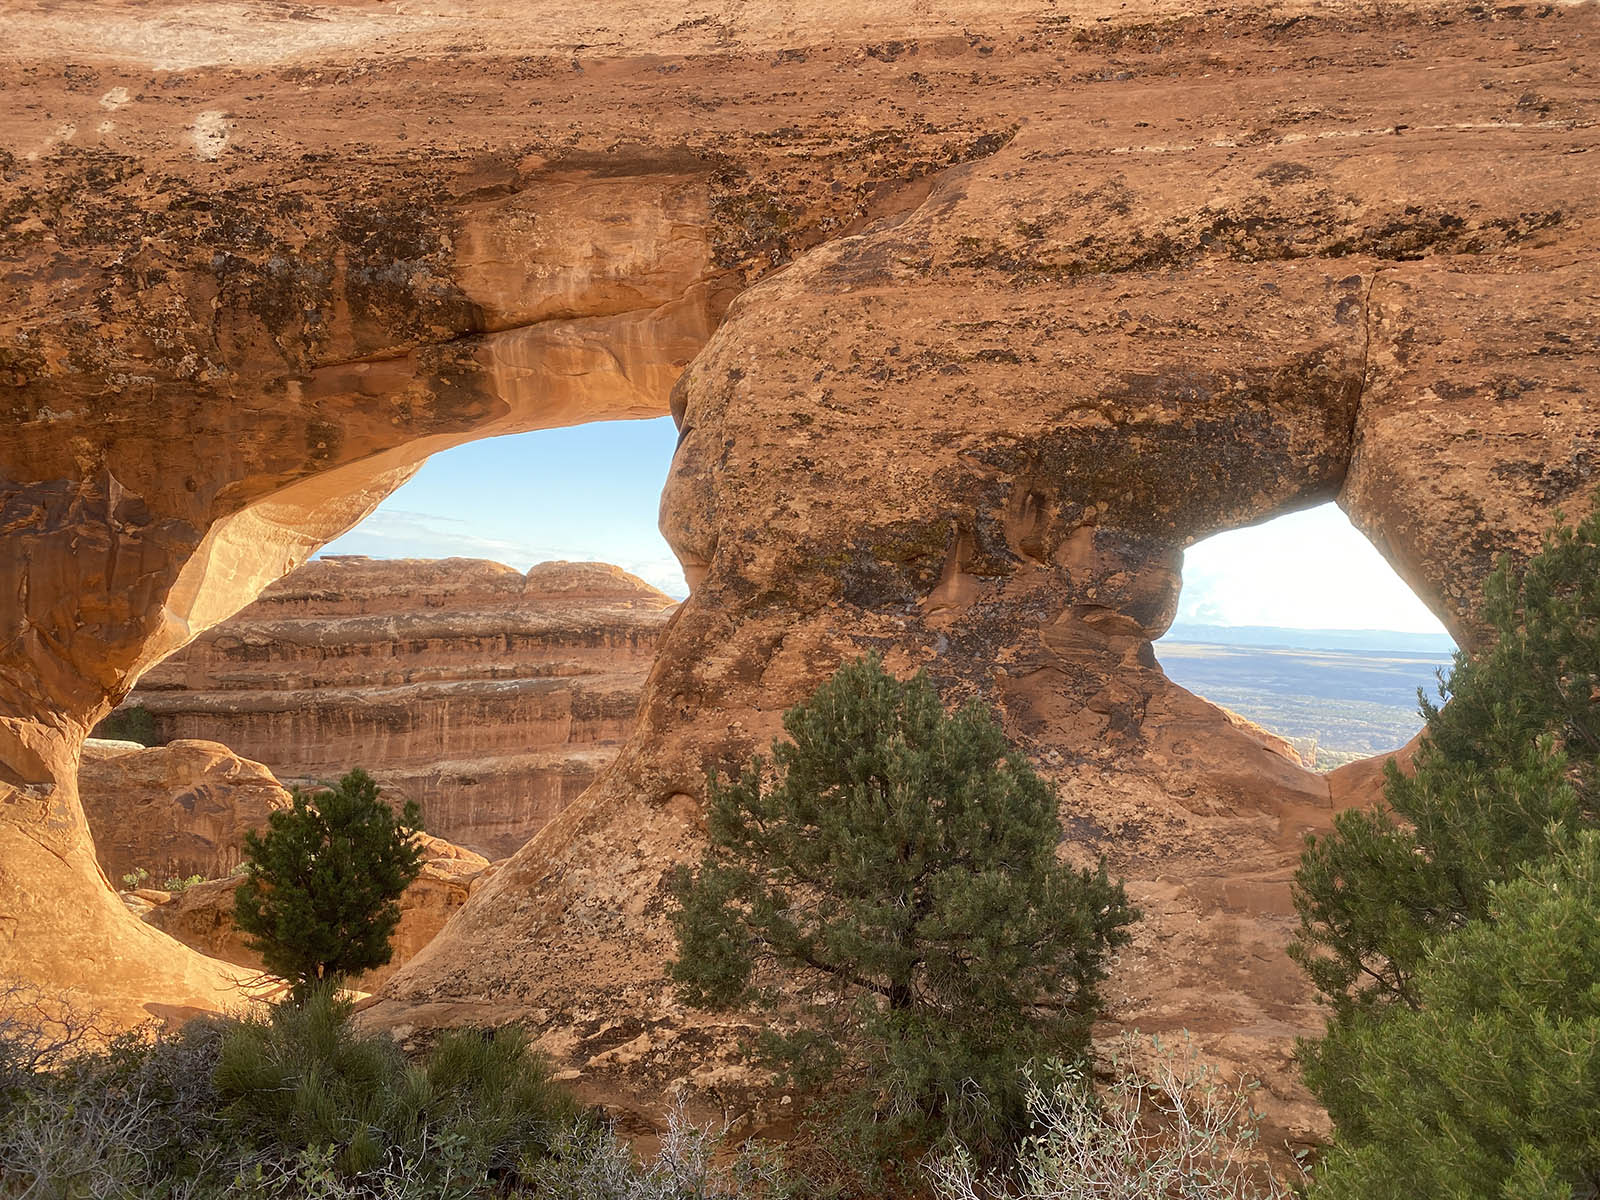 Partition Arch. Arches National Park, Utah. Credit: Carolina Valenzuela